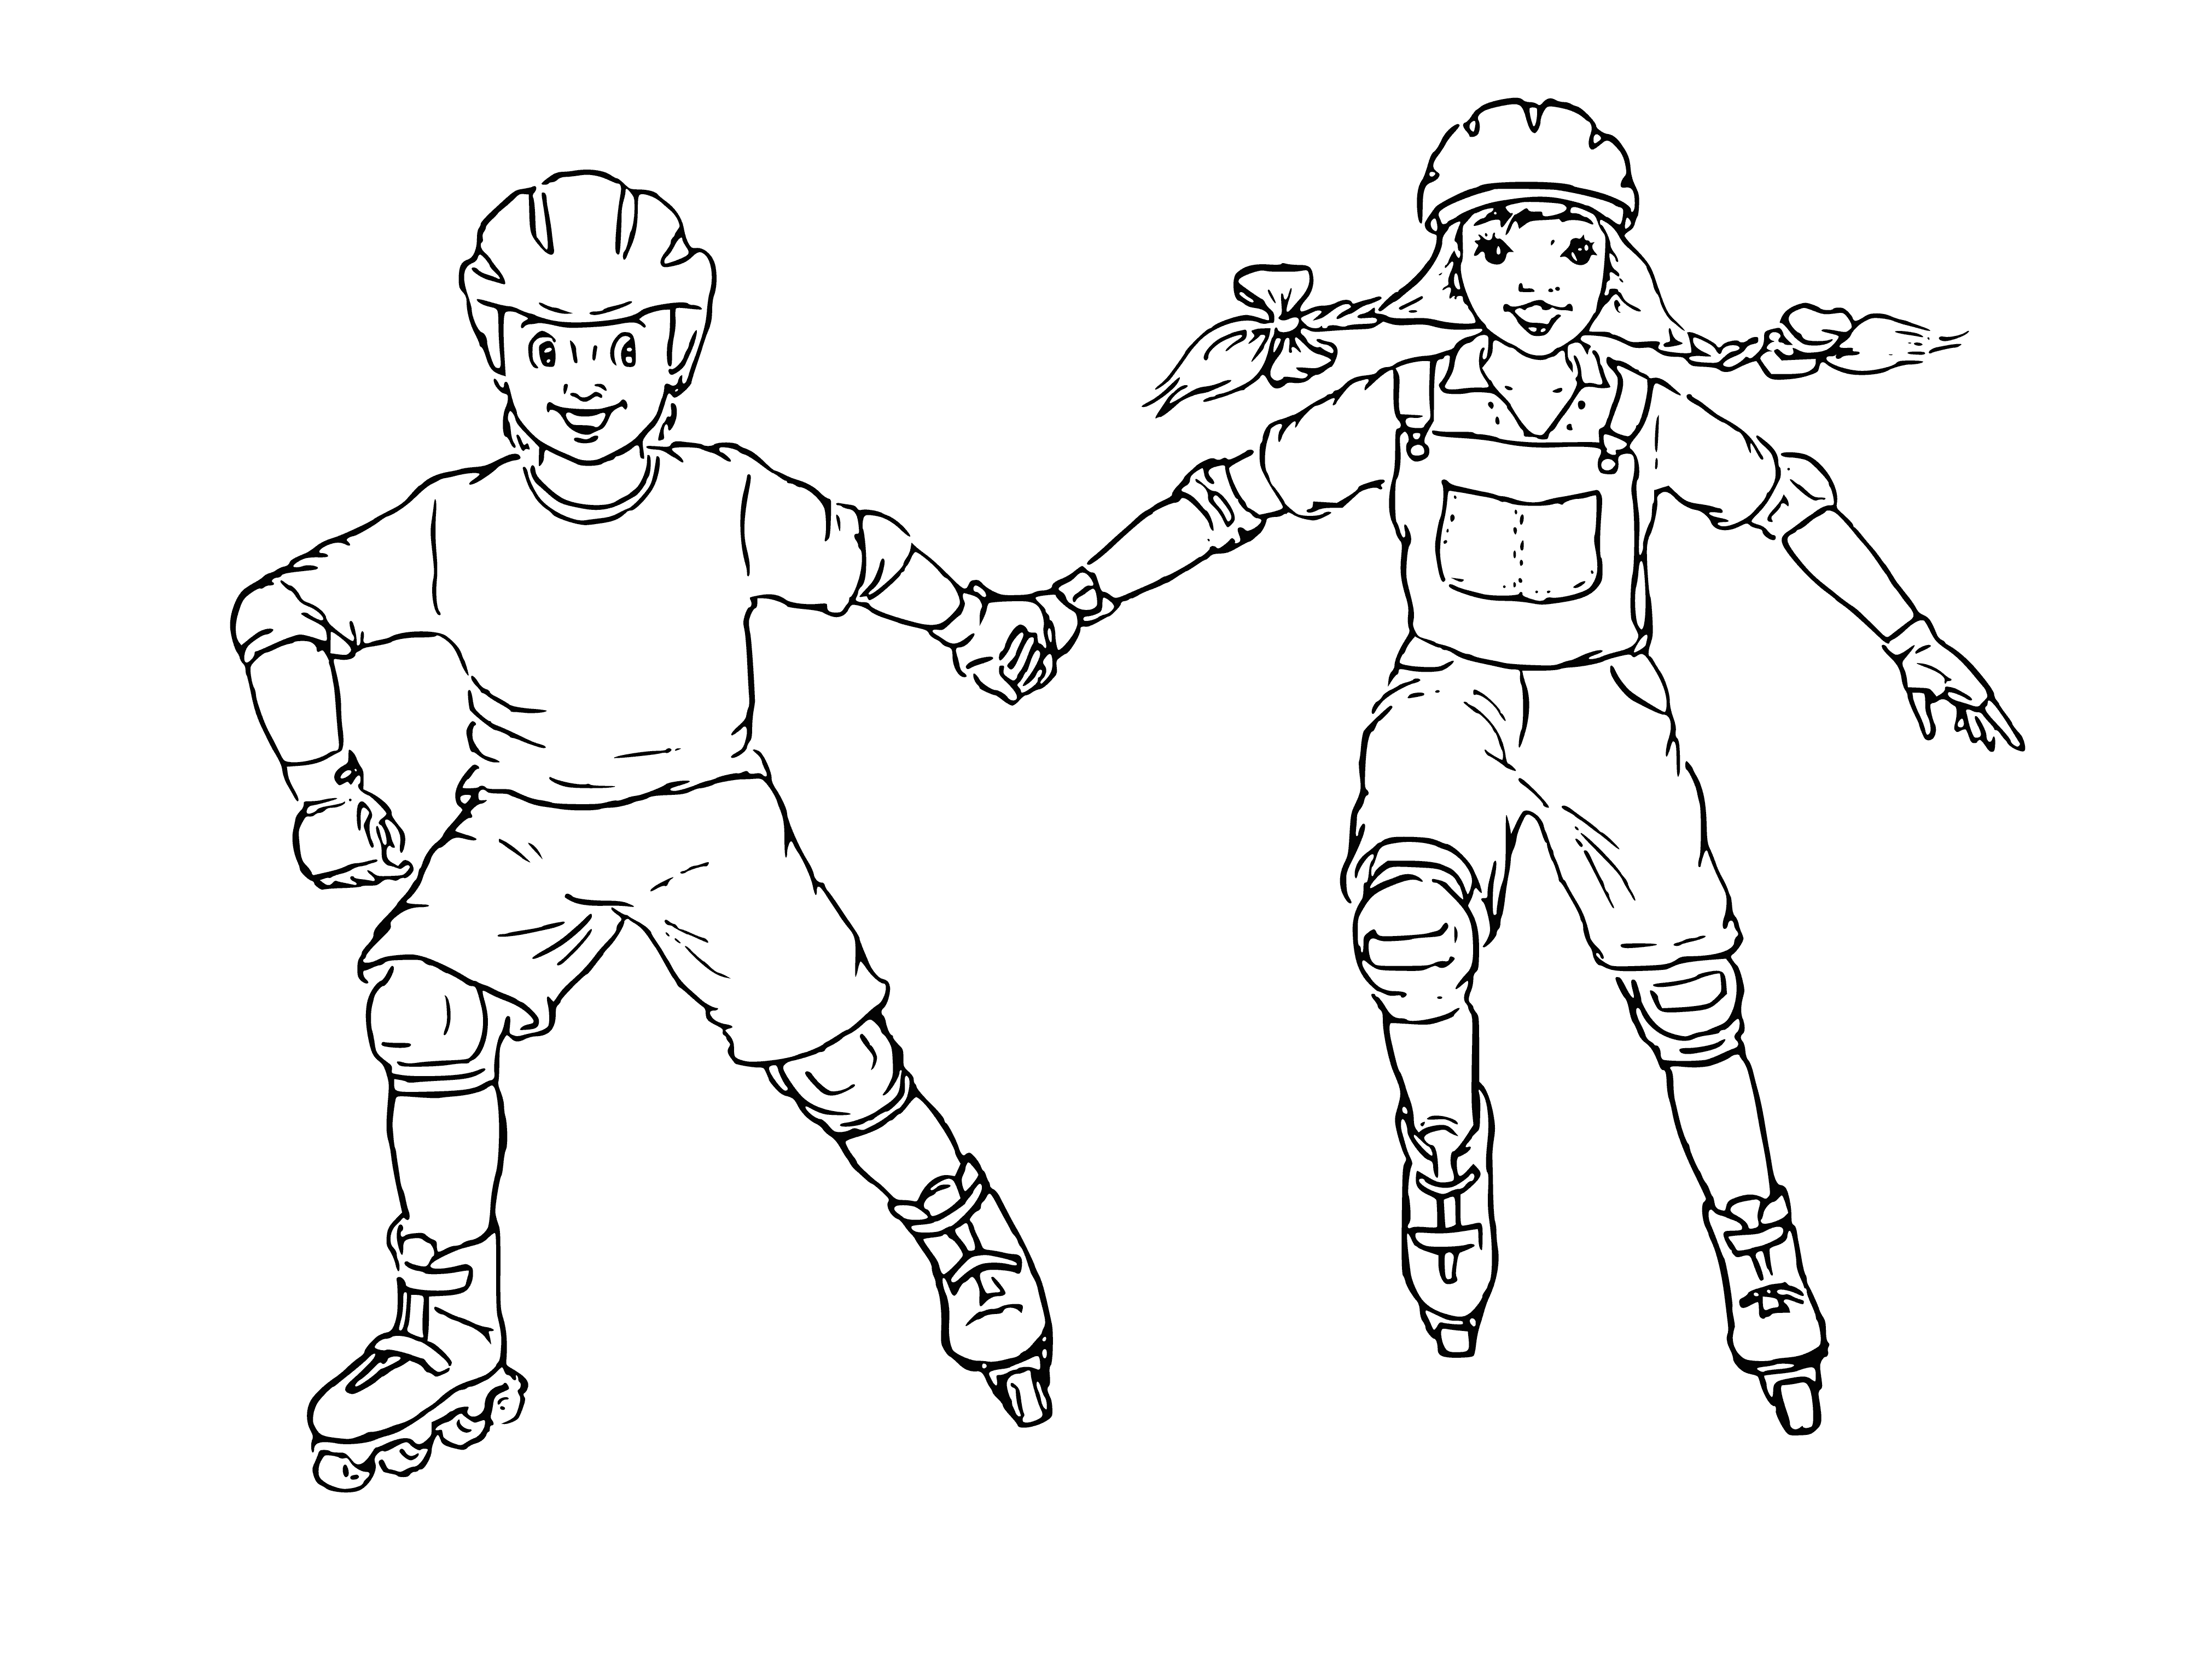 Children on roller skates coloring page